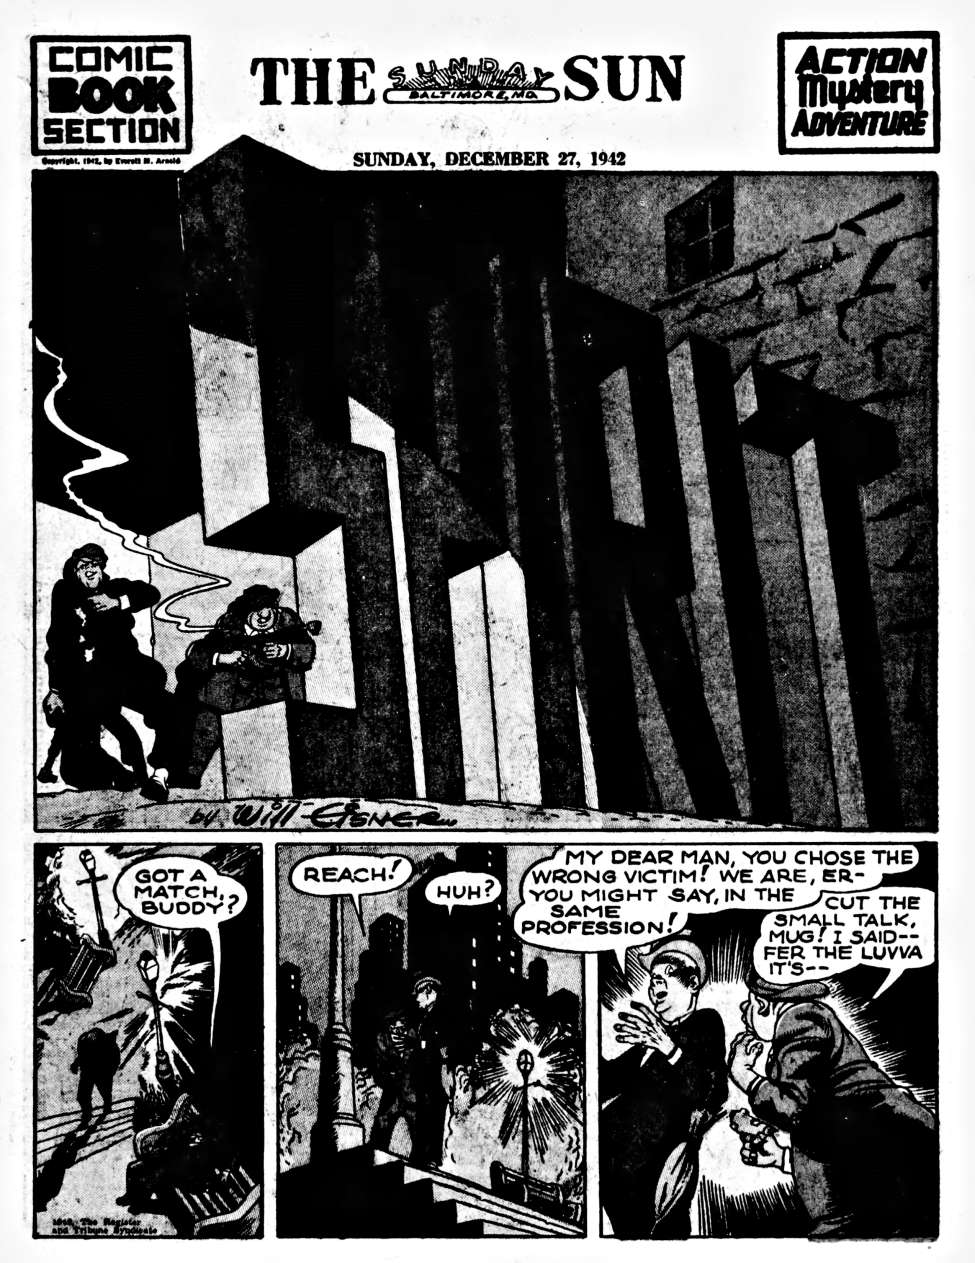 Comic Book Cover For The Spirit (1942-12-27) - Baltimore Sun (b/w)